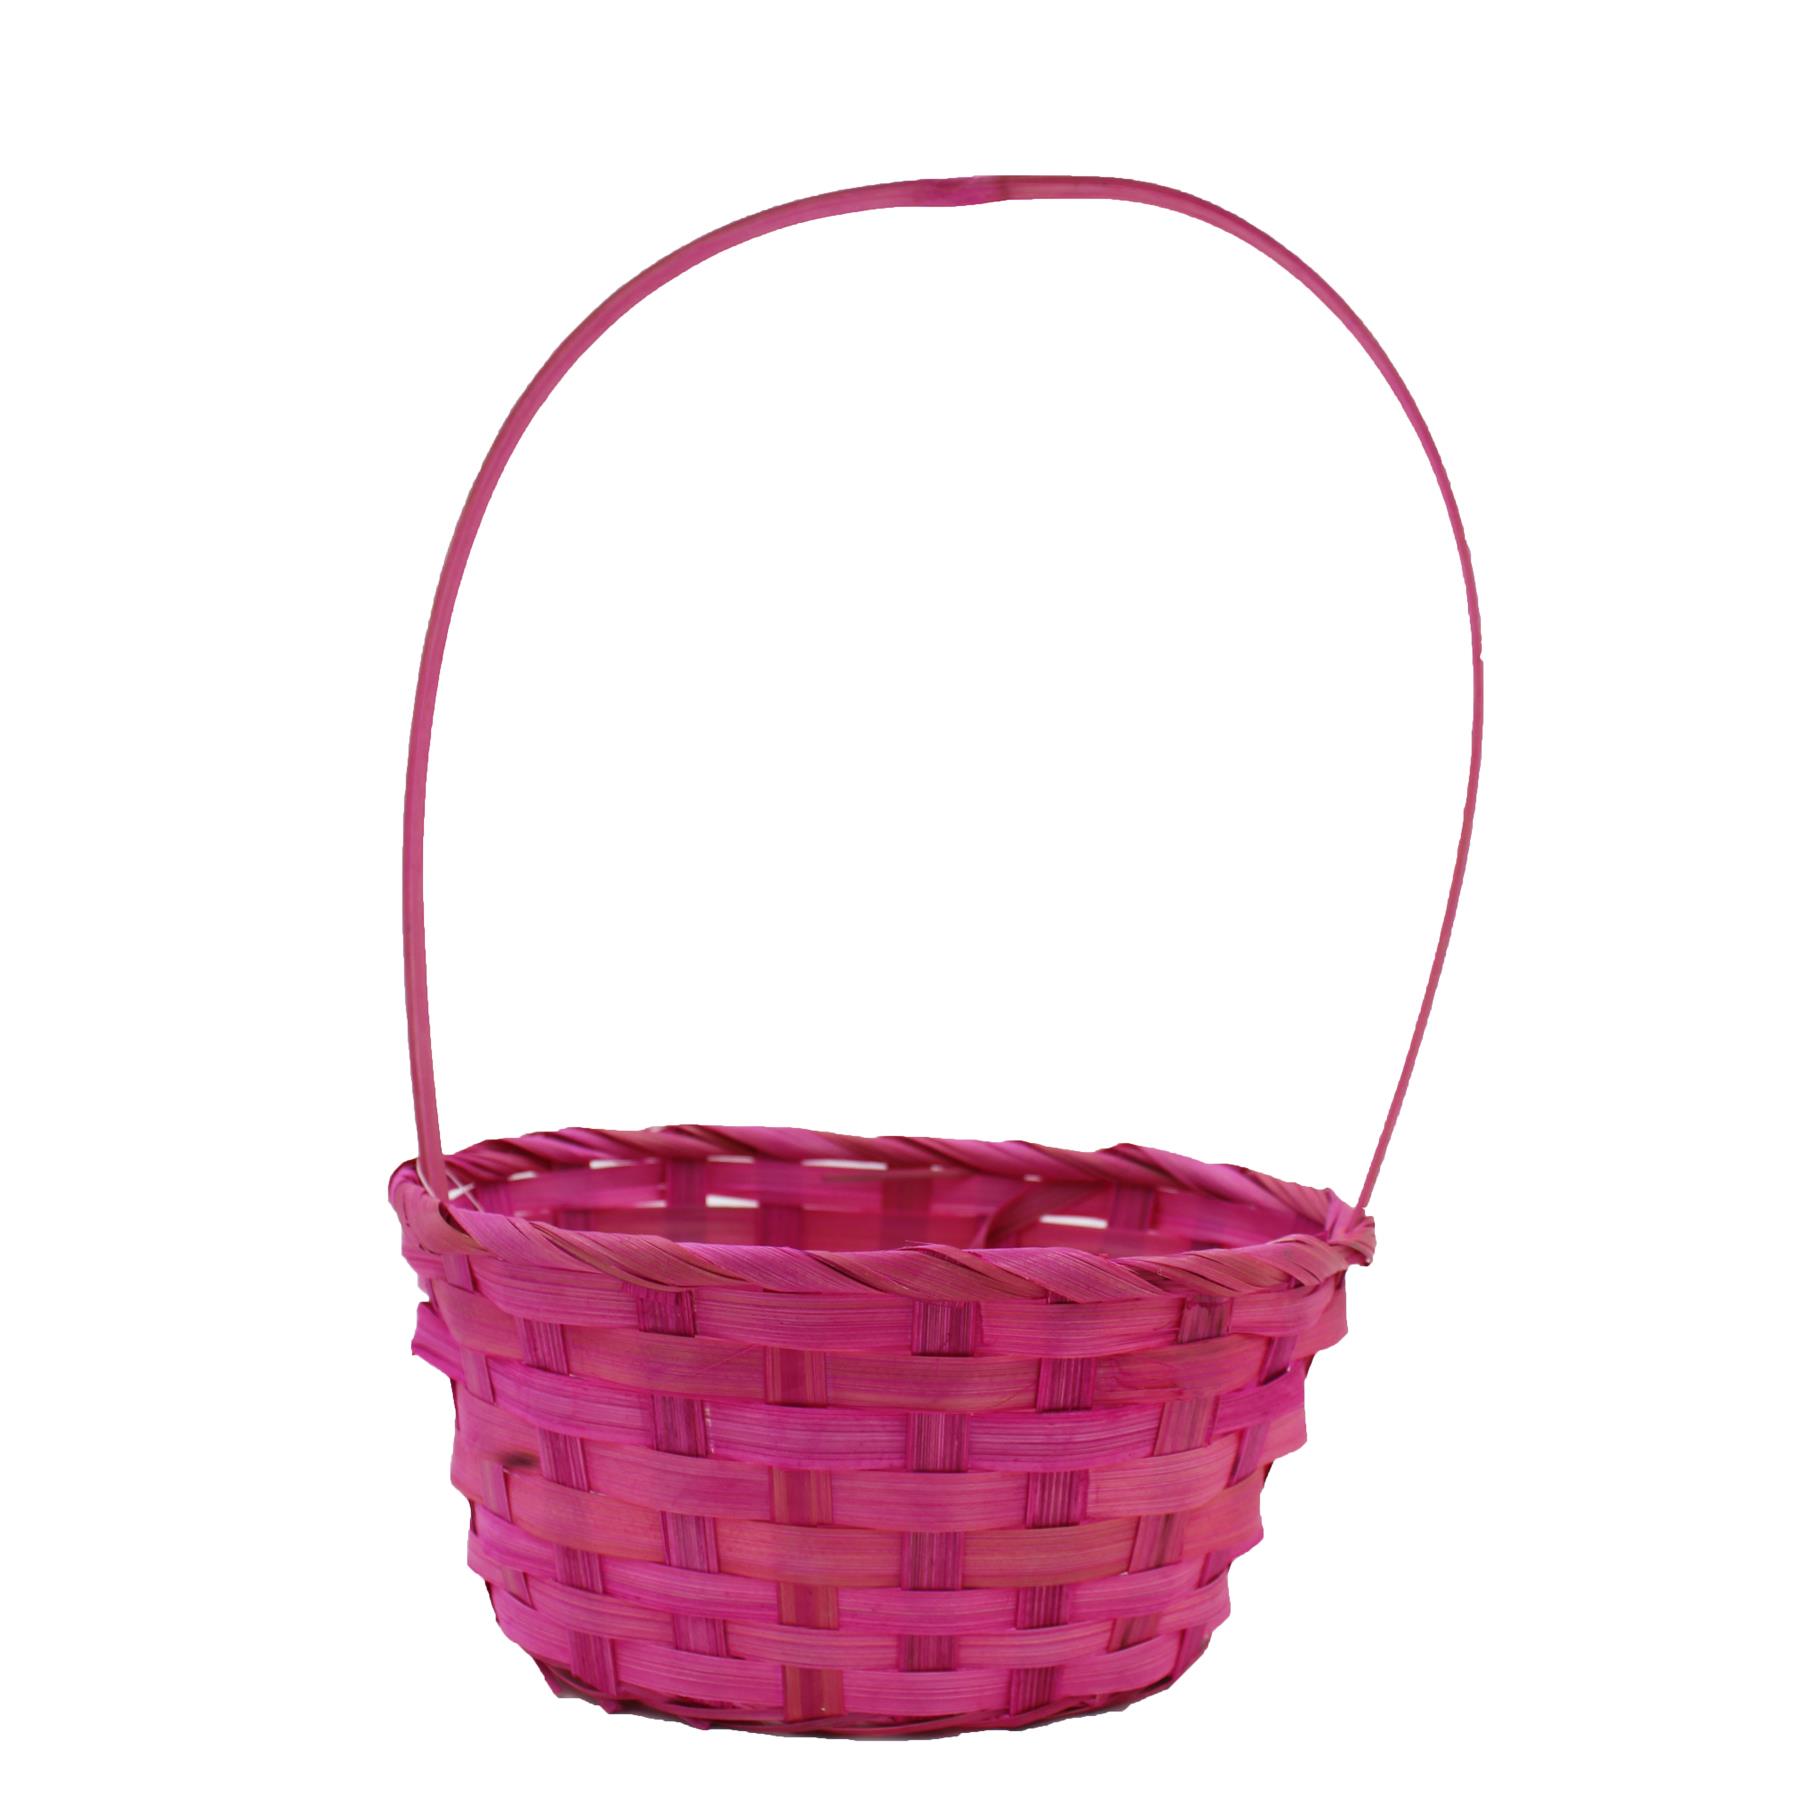 Easter Baskets, Buckets, Accessories - Pink Wicker Basket